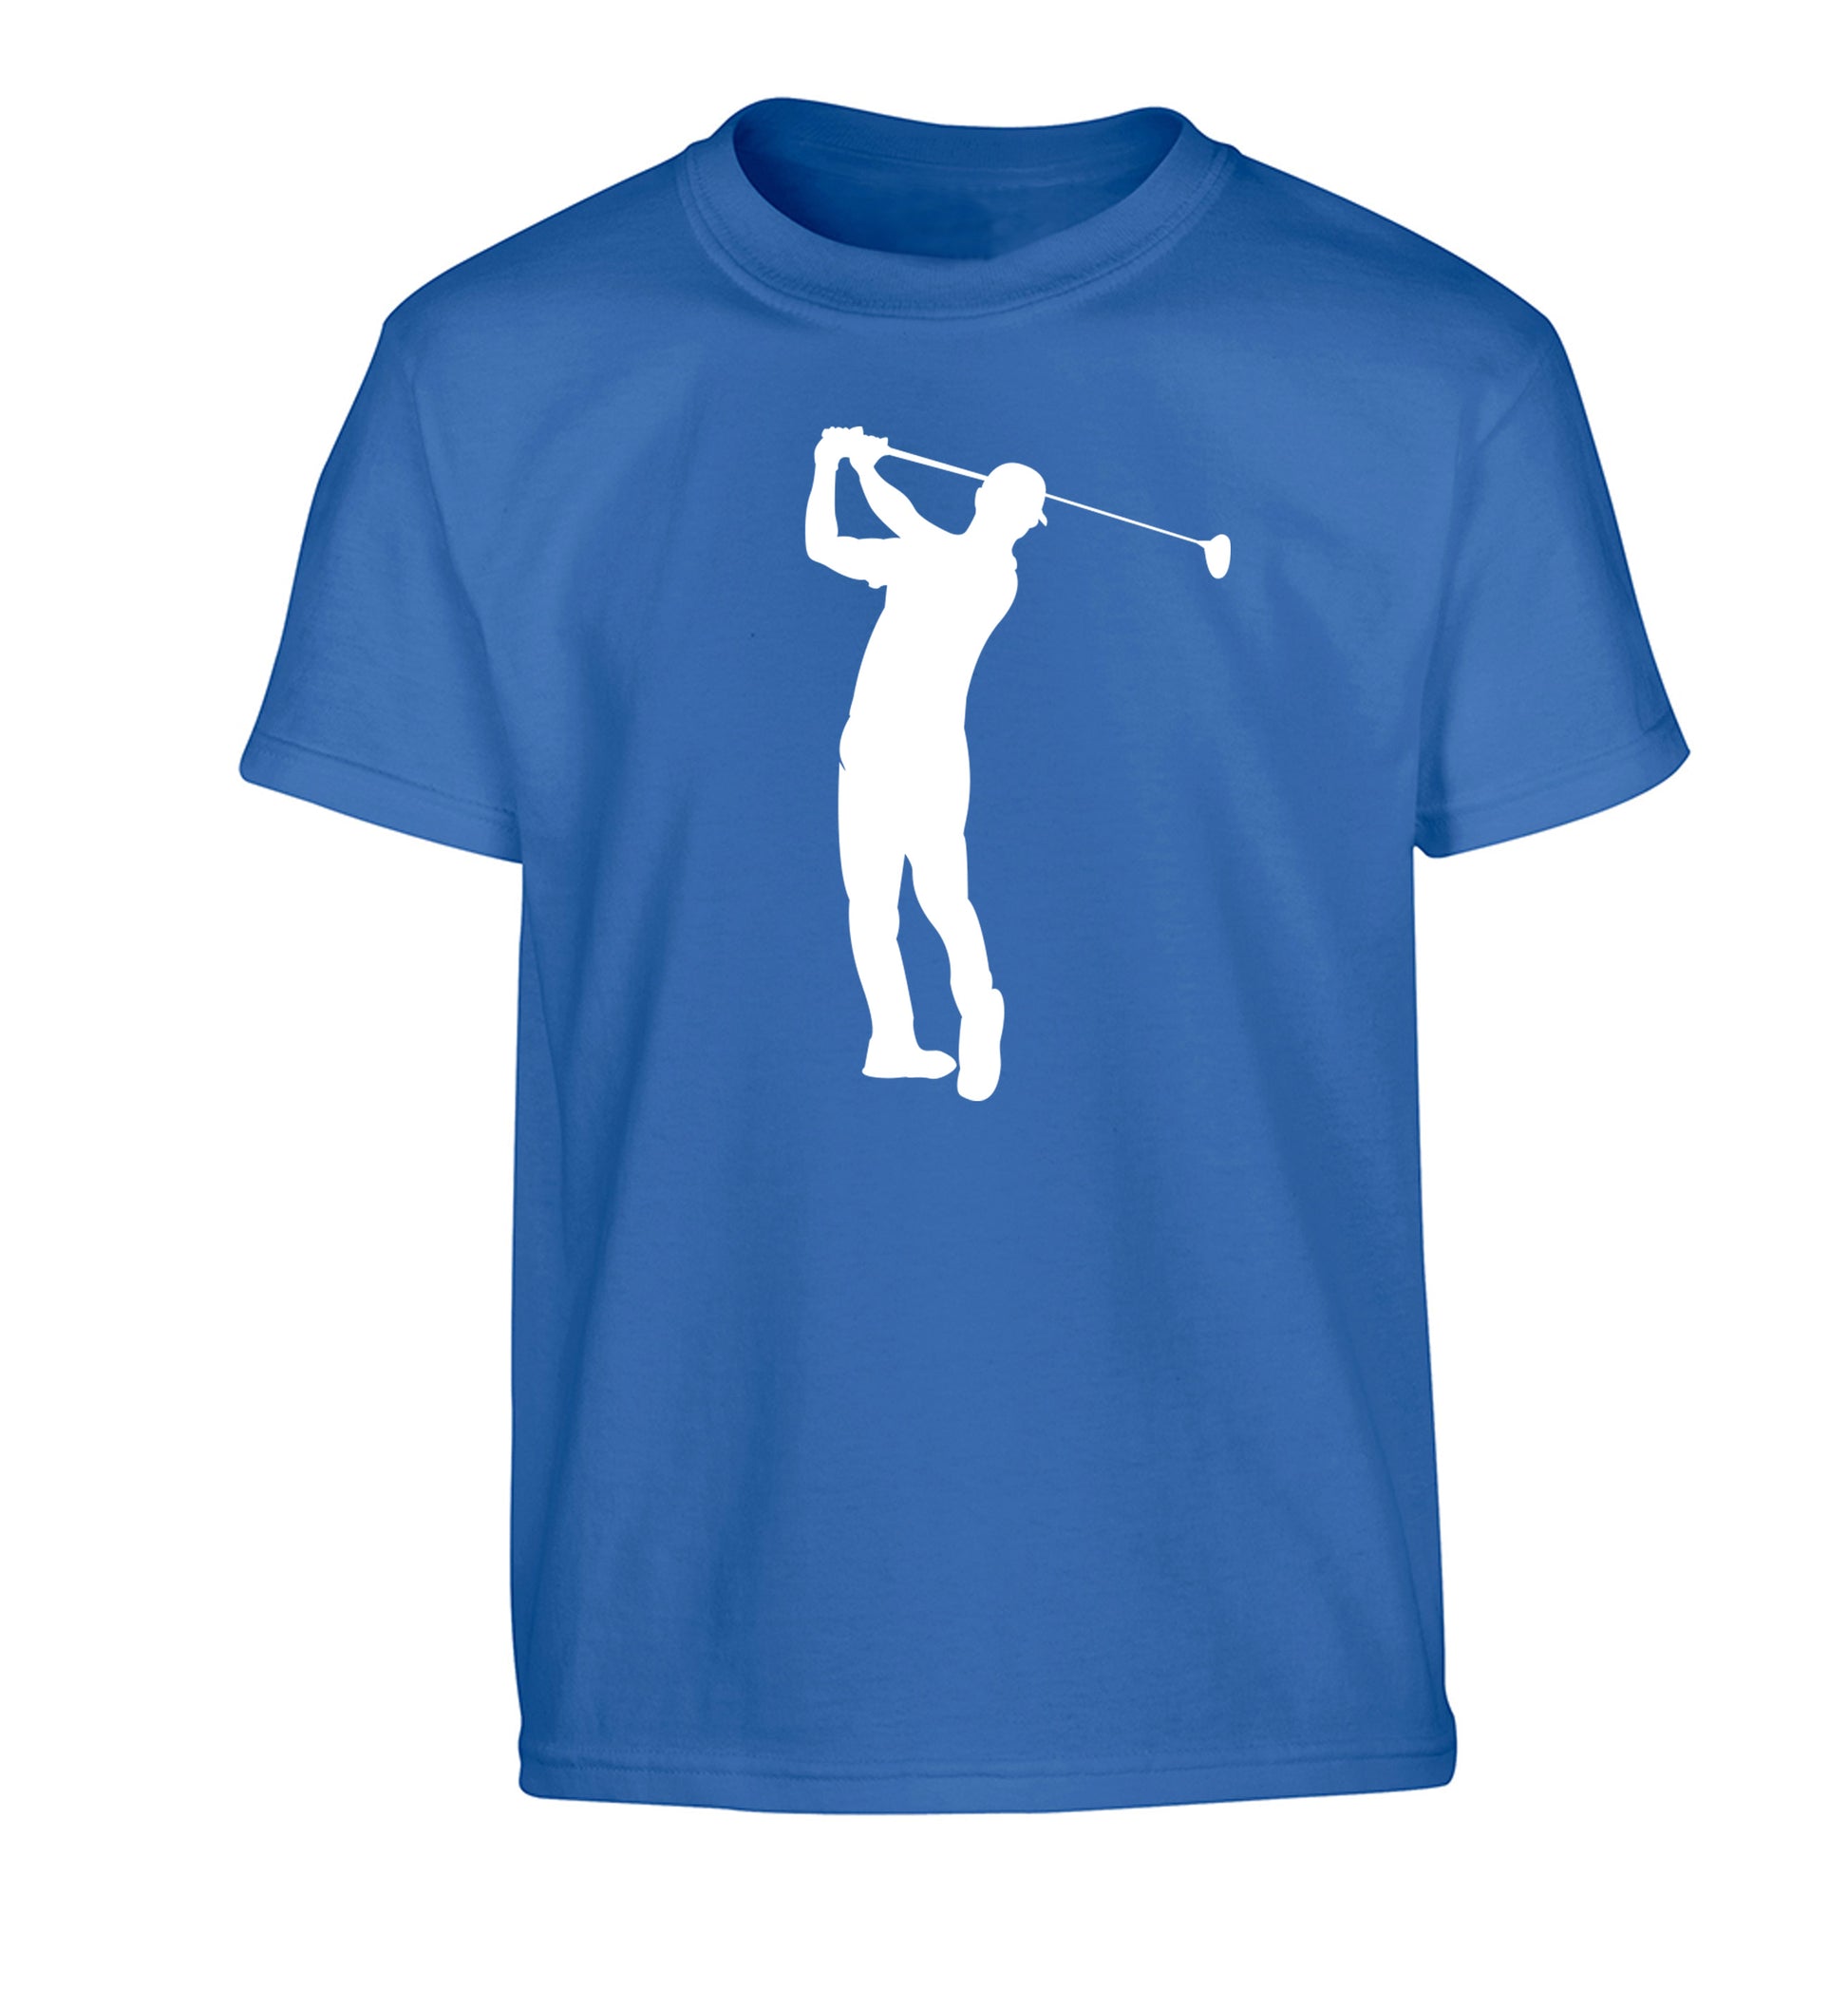 Golfer Illustration Children's blue Tshirt 12-13 Years